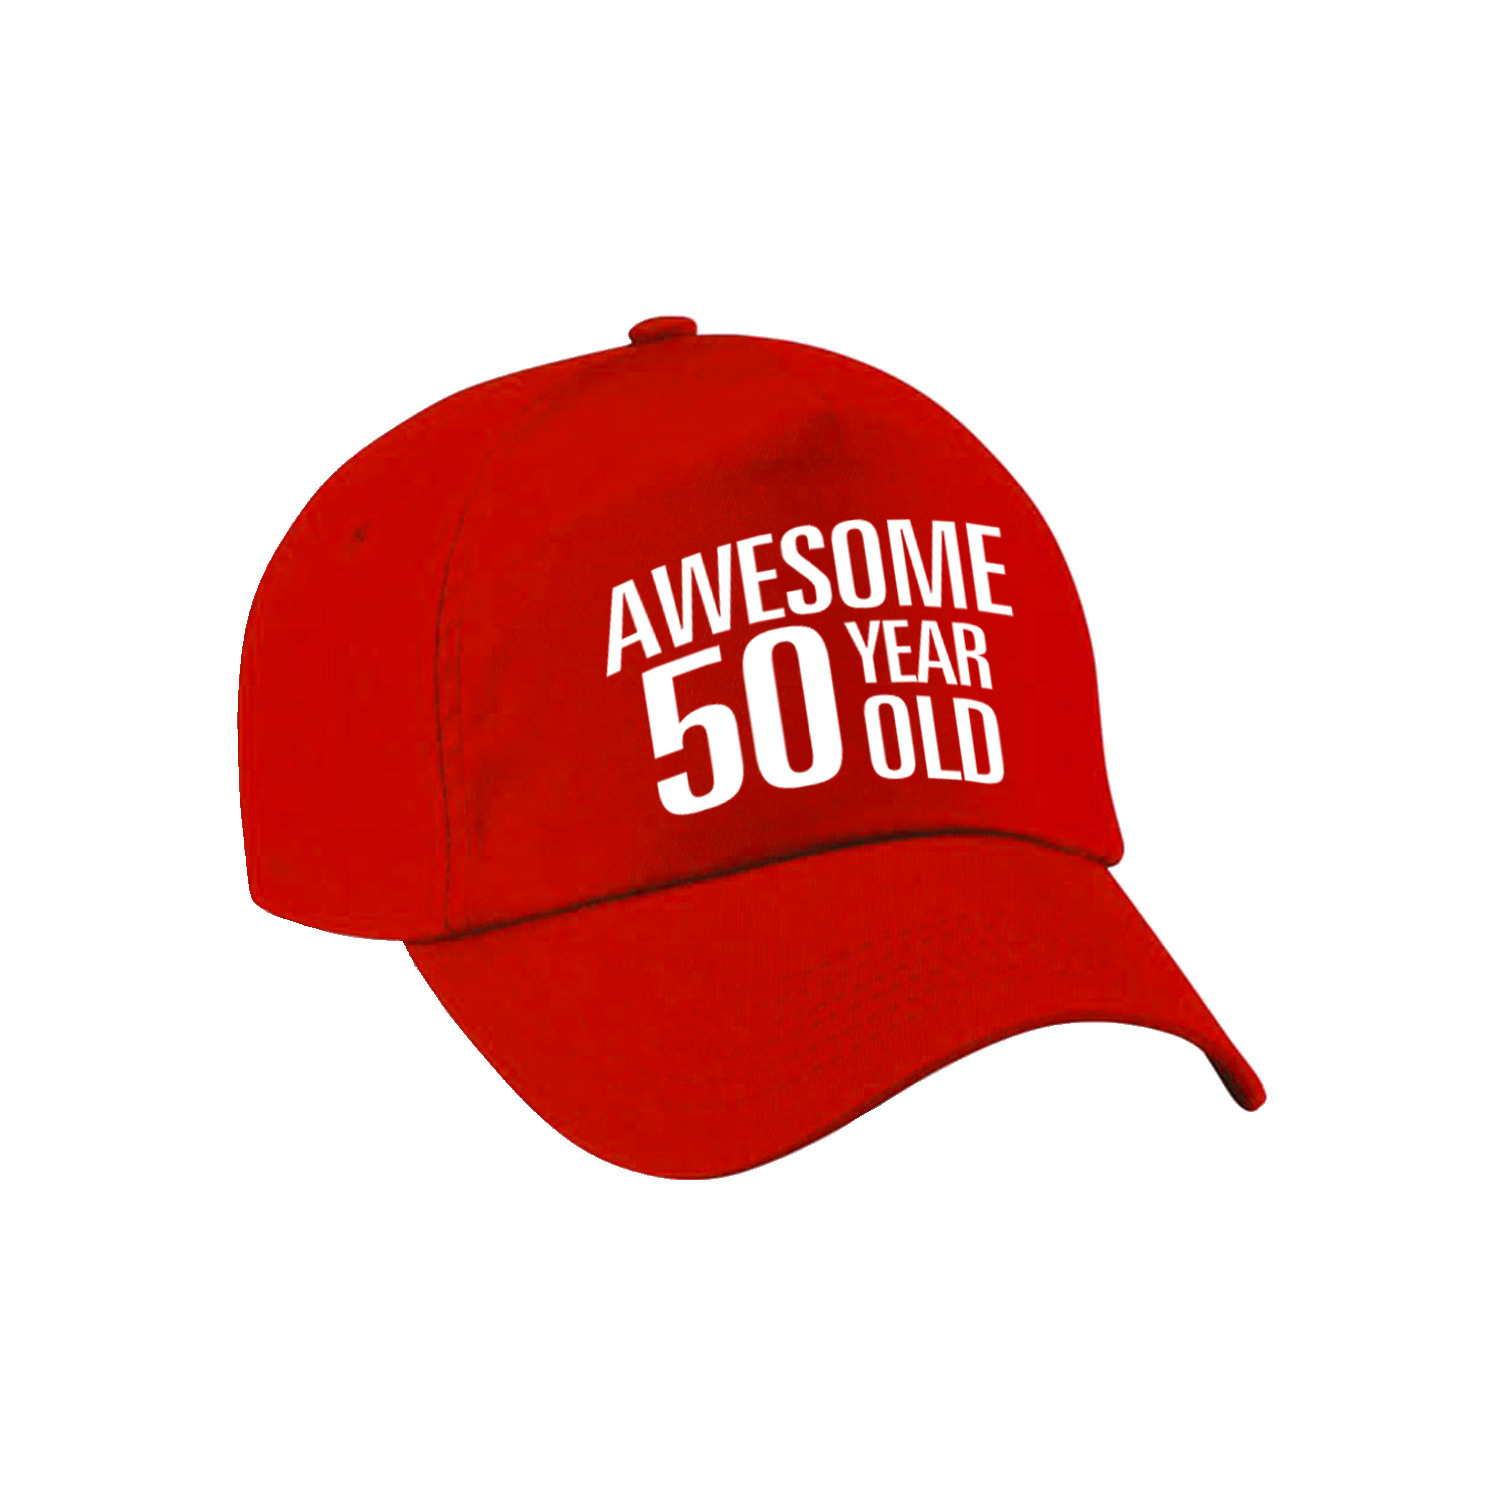 Awesome 50 year old verjaardag pet-cap rood voor dames en heren